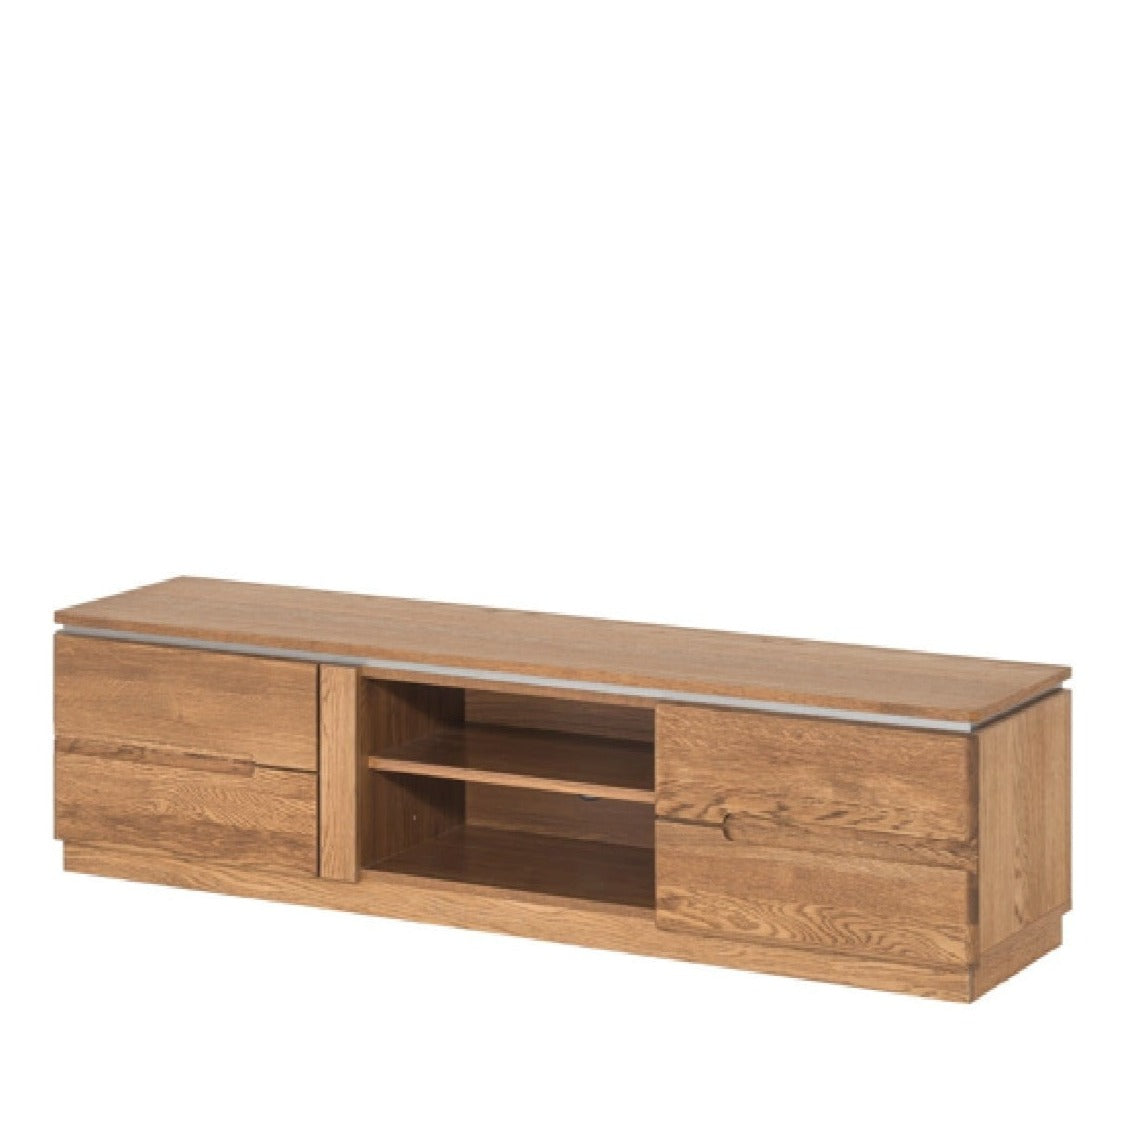 NordicStory Mueble de TV de madera de roble